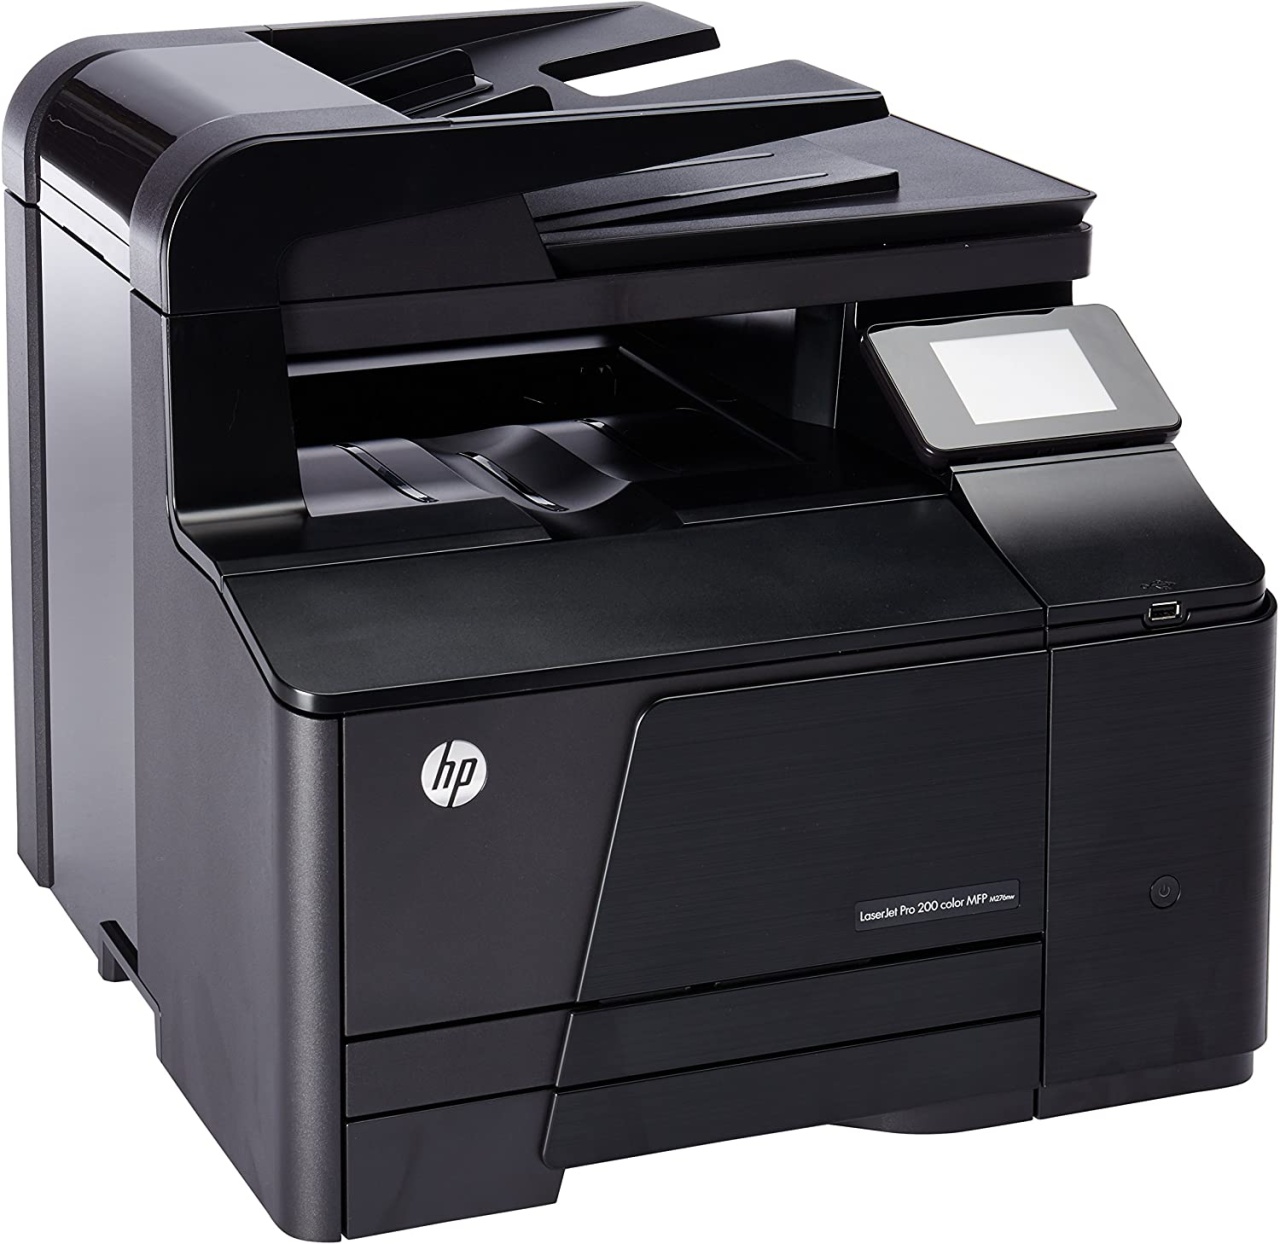 Принтер HP LASERJET Pro 200 Color m251